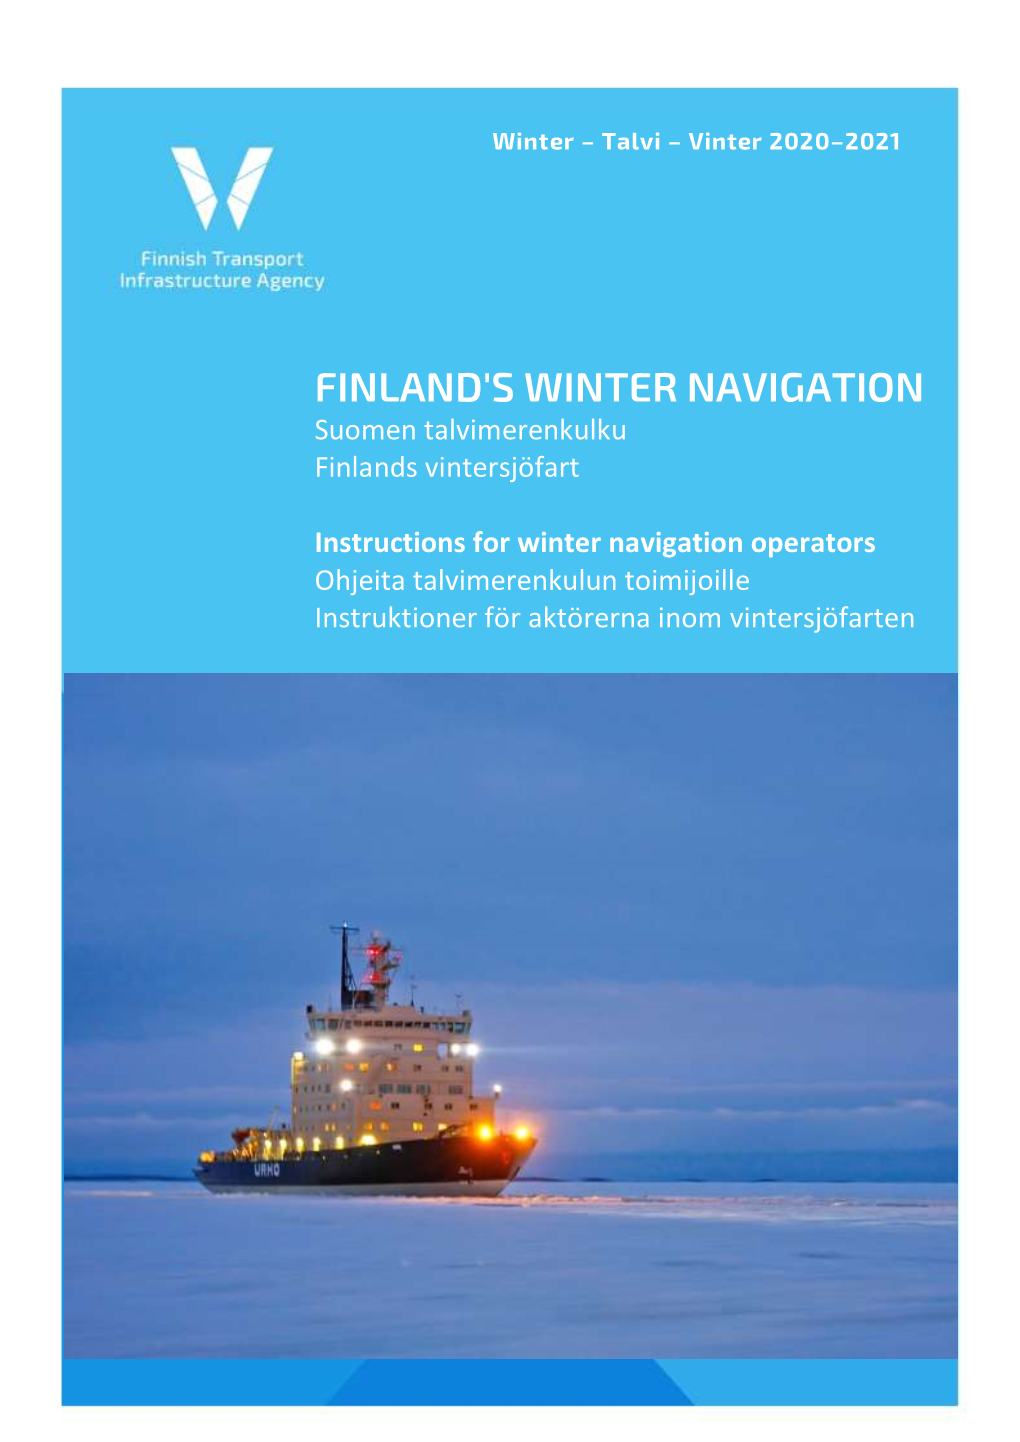 Finland's Winter Navigation 2020-2021